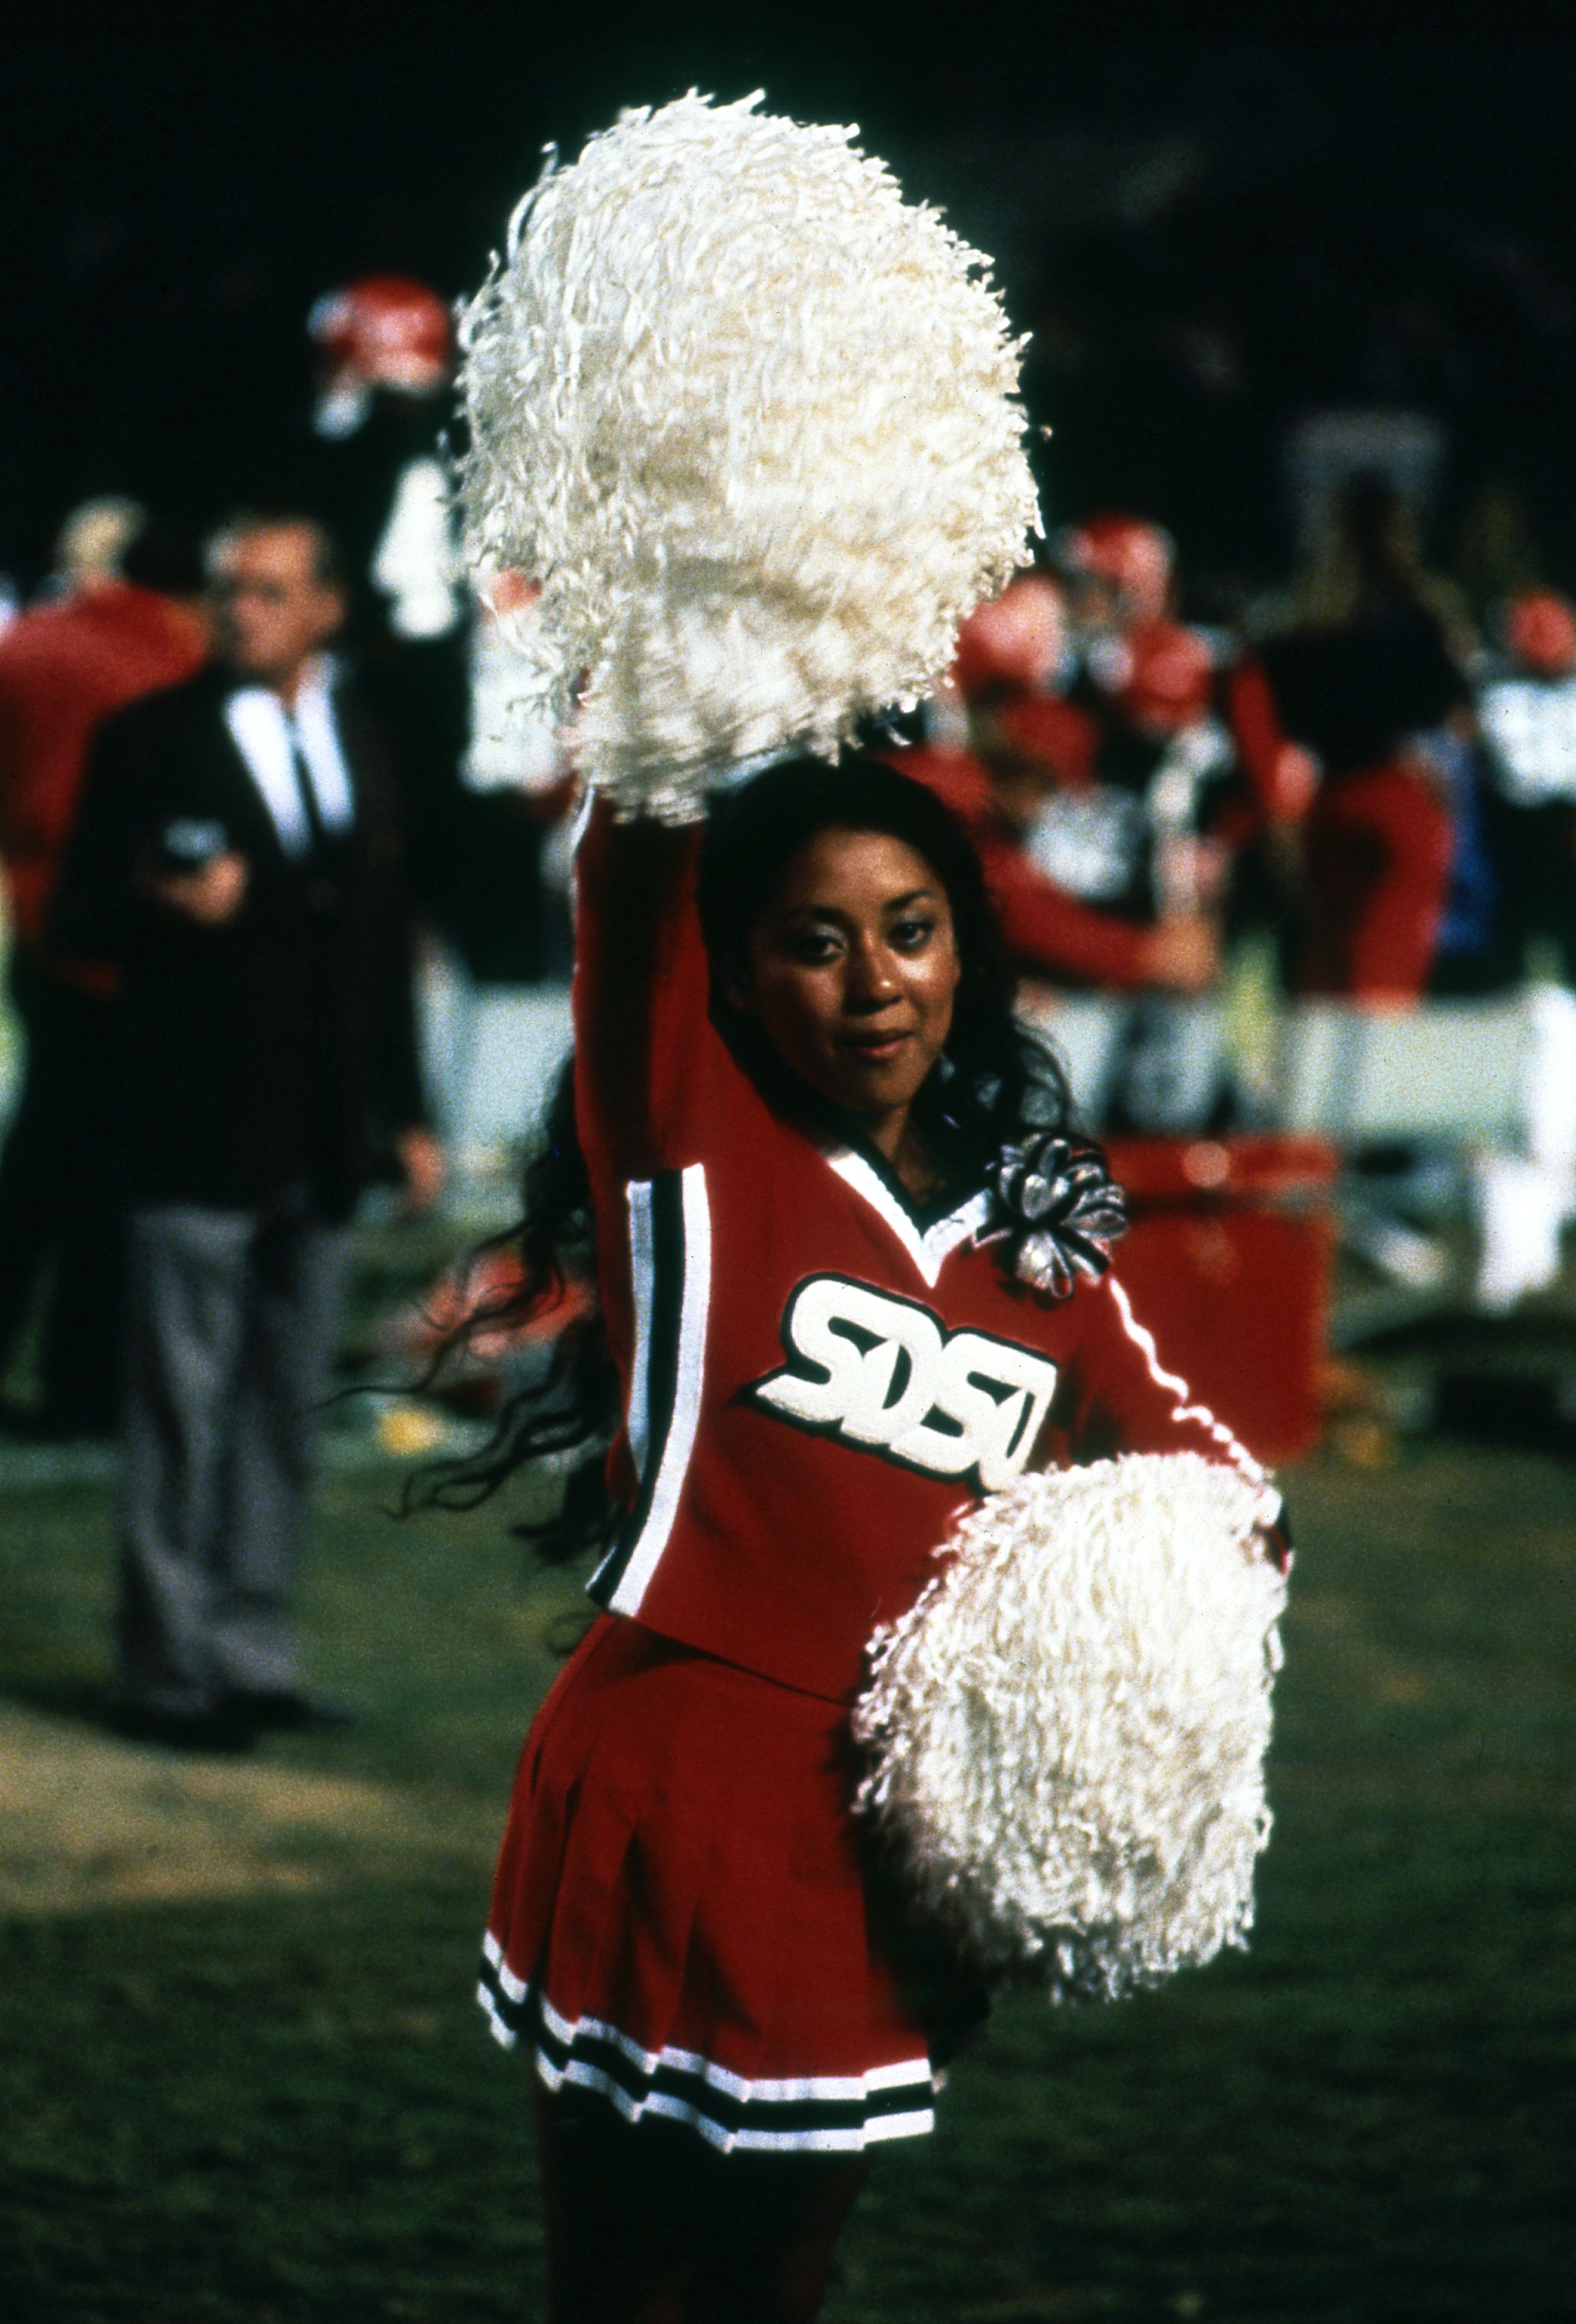 80s cheerleader hair